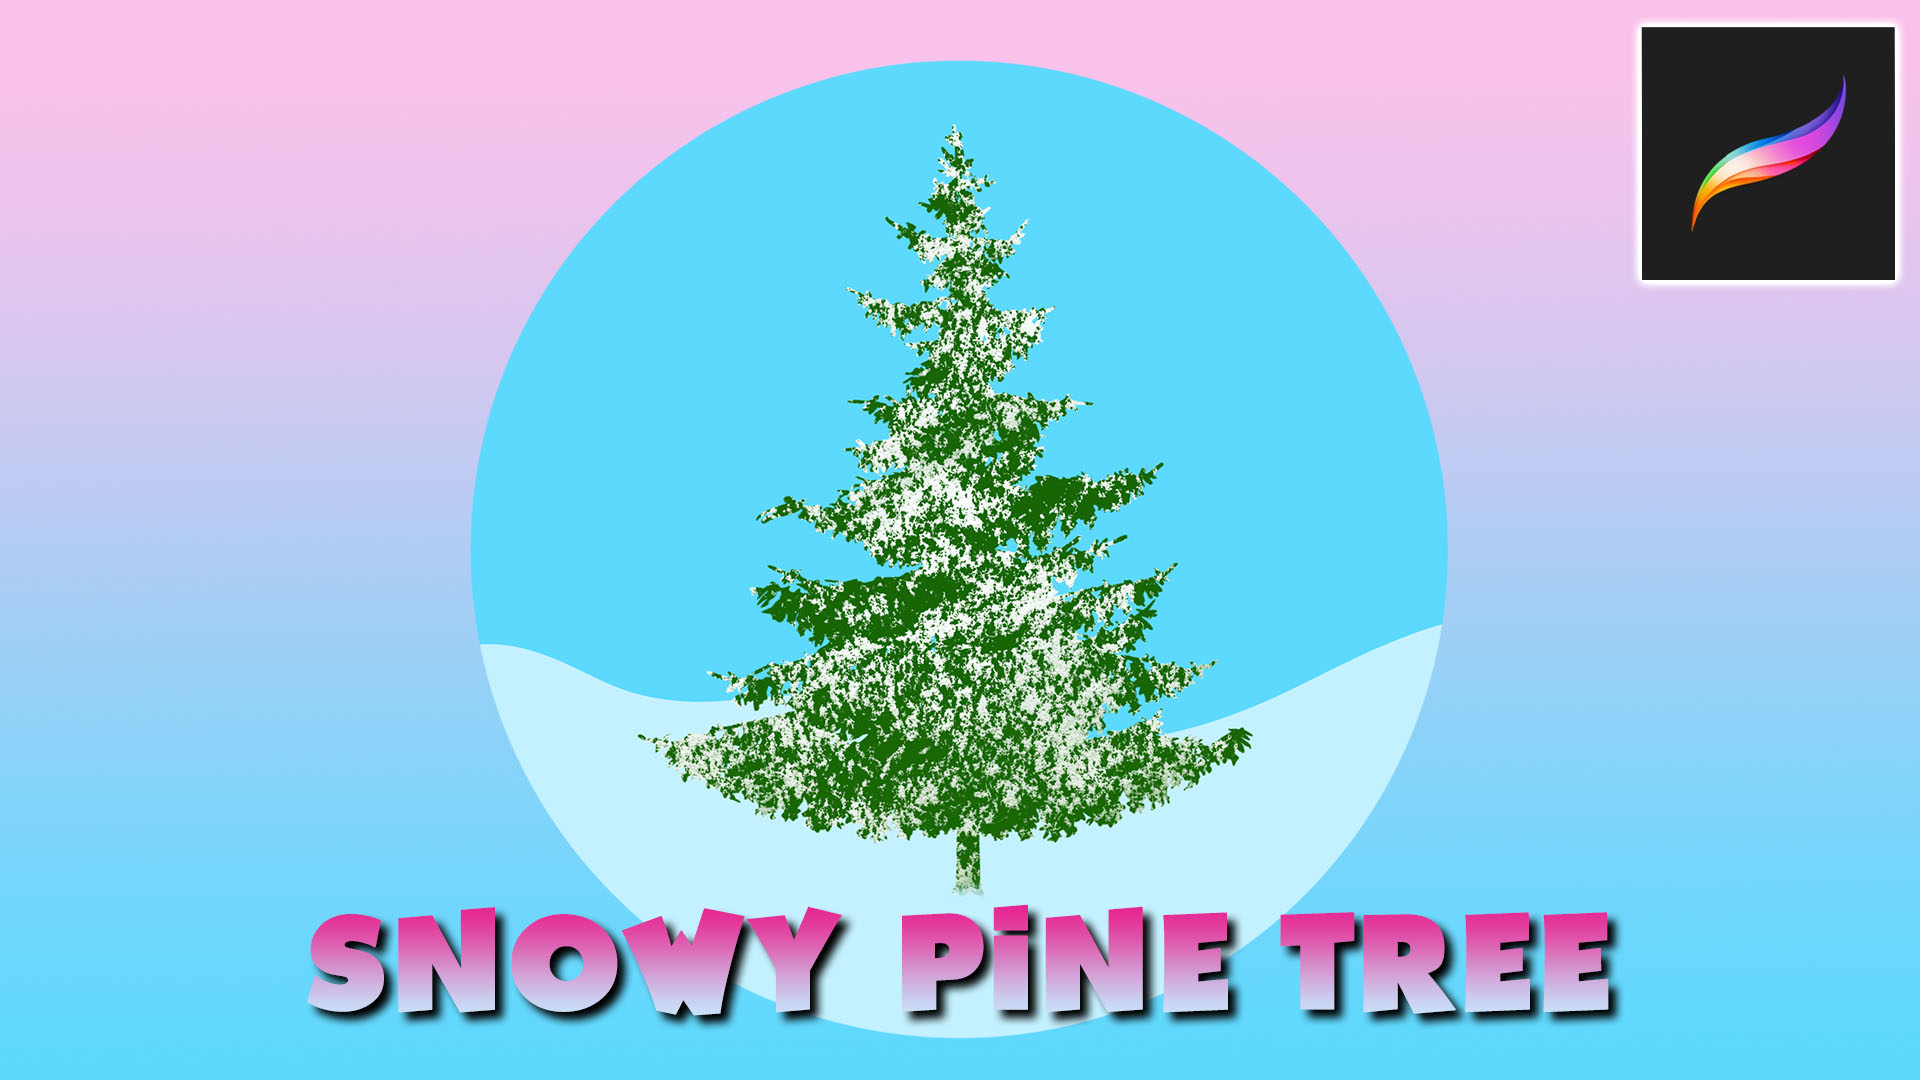 Snow Pine Tree Tutorial | Procreate for Beginners